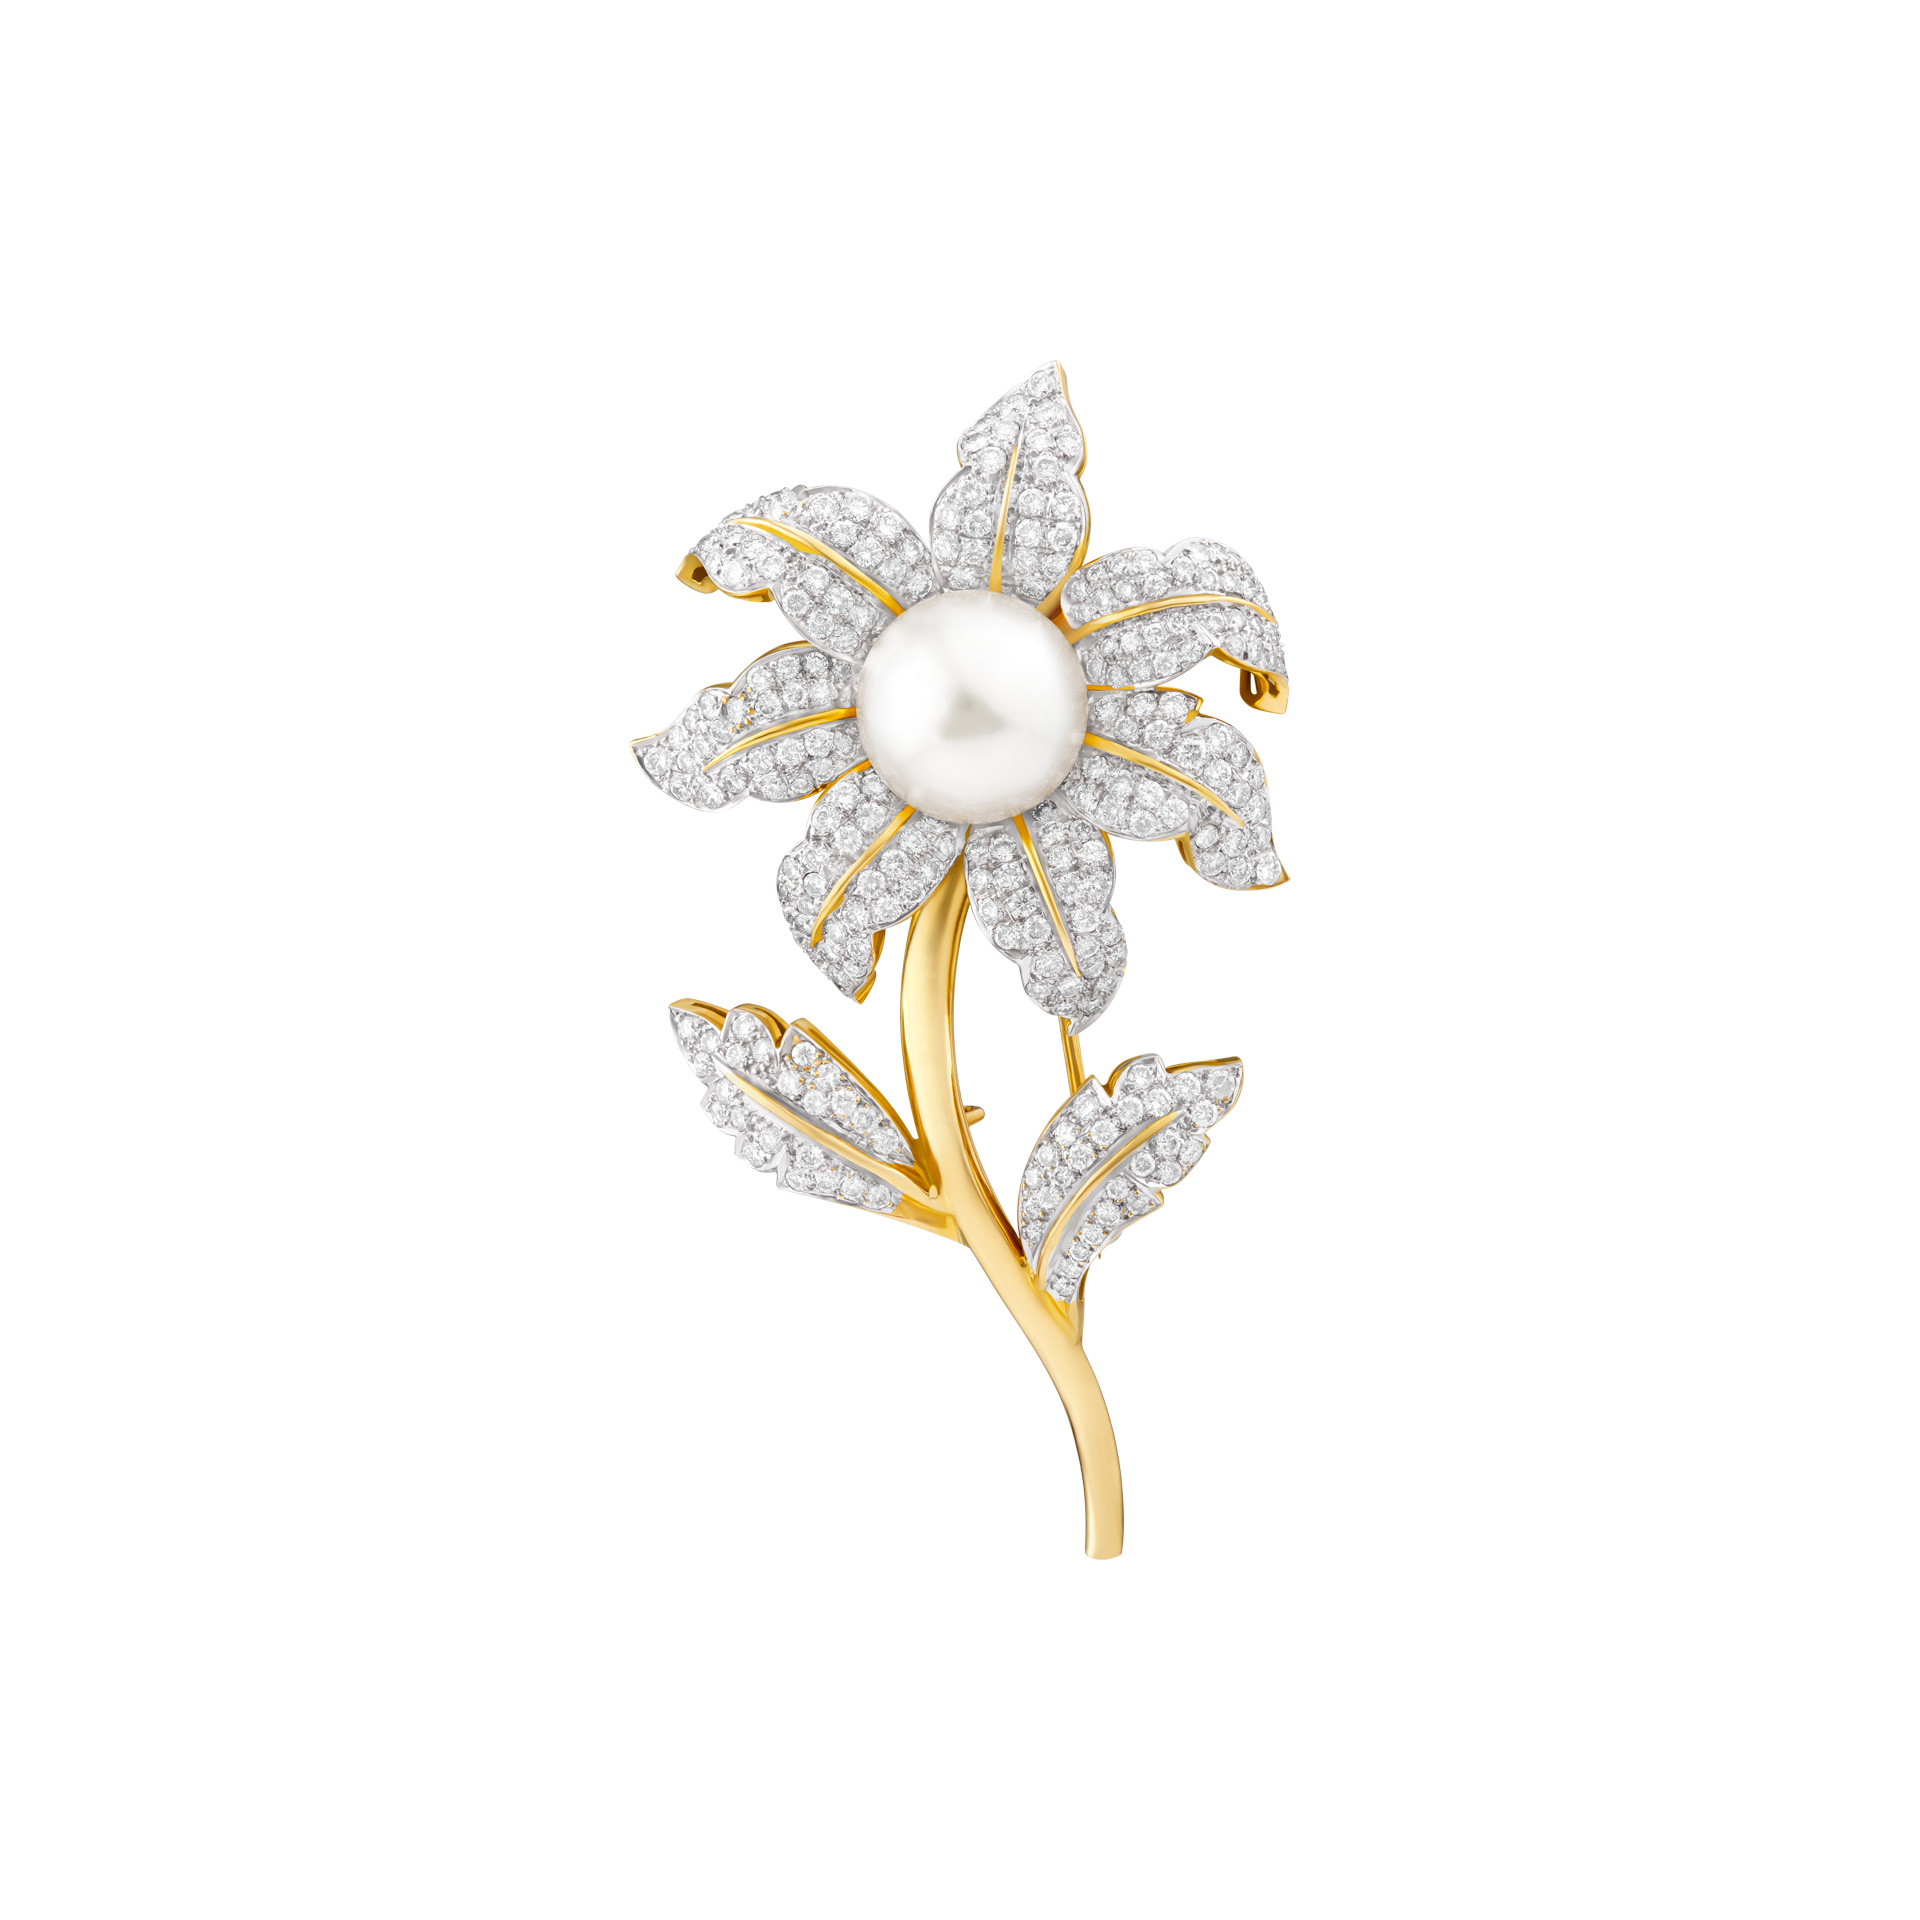 Pearl Flower broach in 18k with diamonds